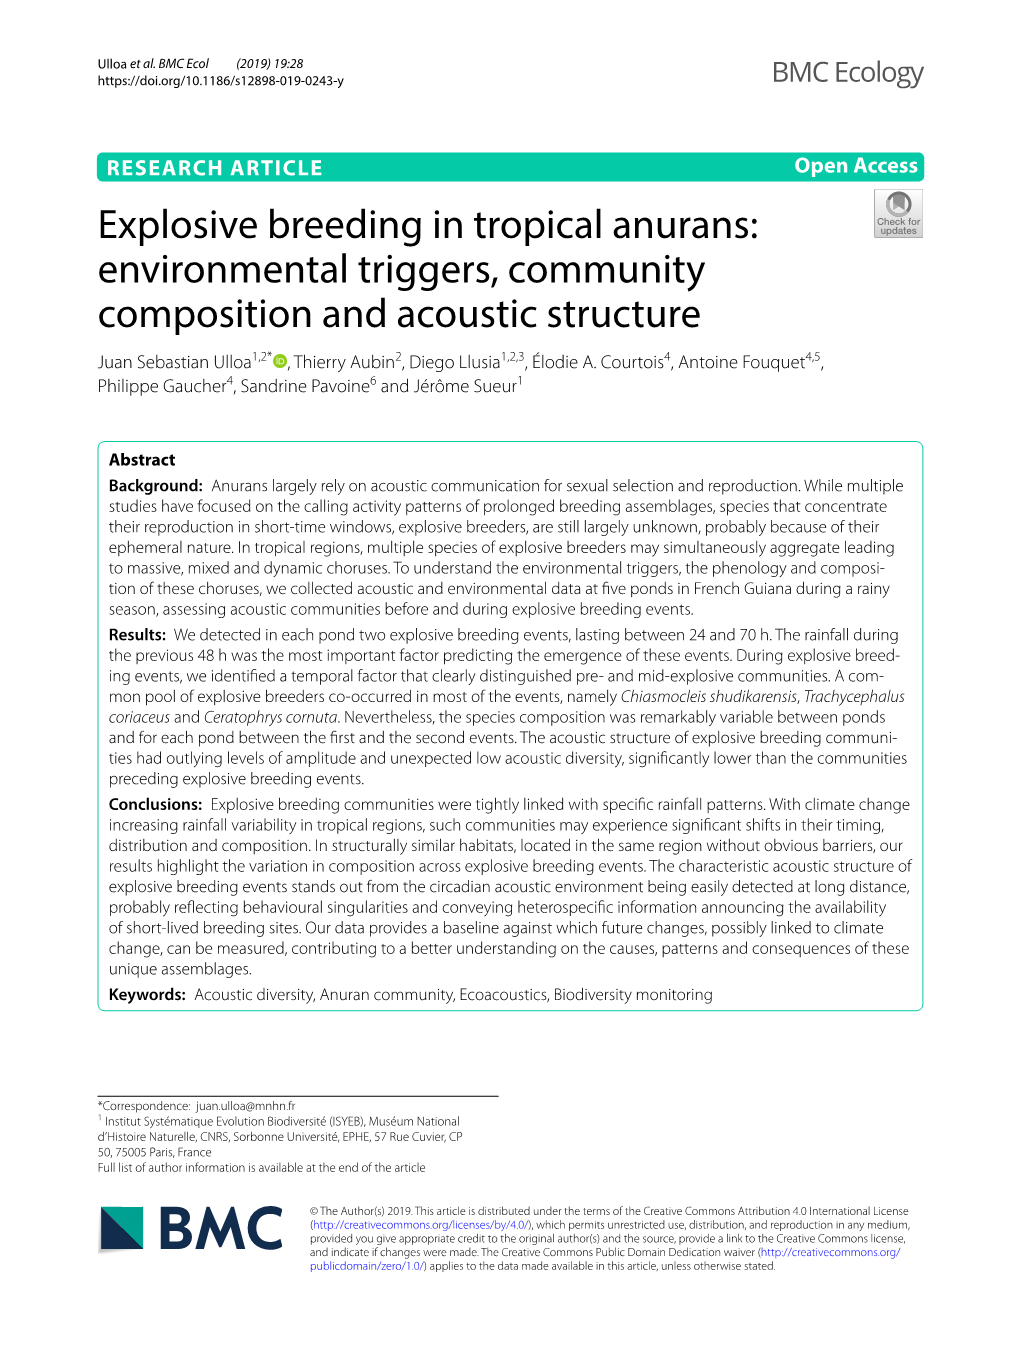 Explosive Breeding in Tropical Anurans